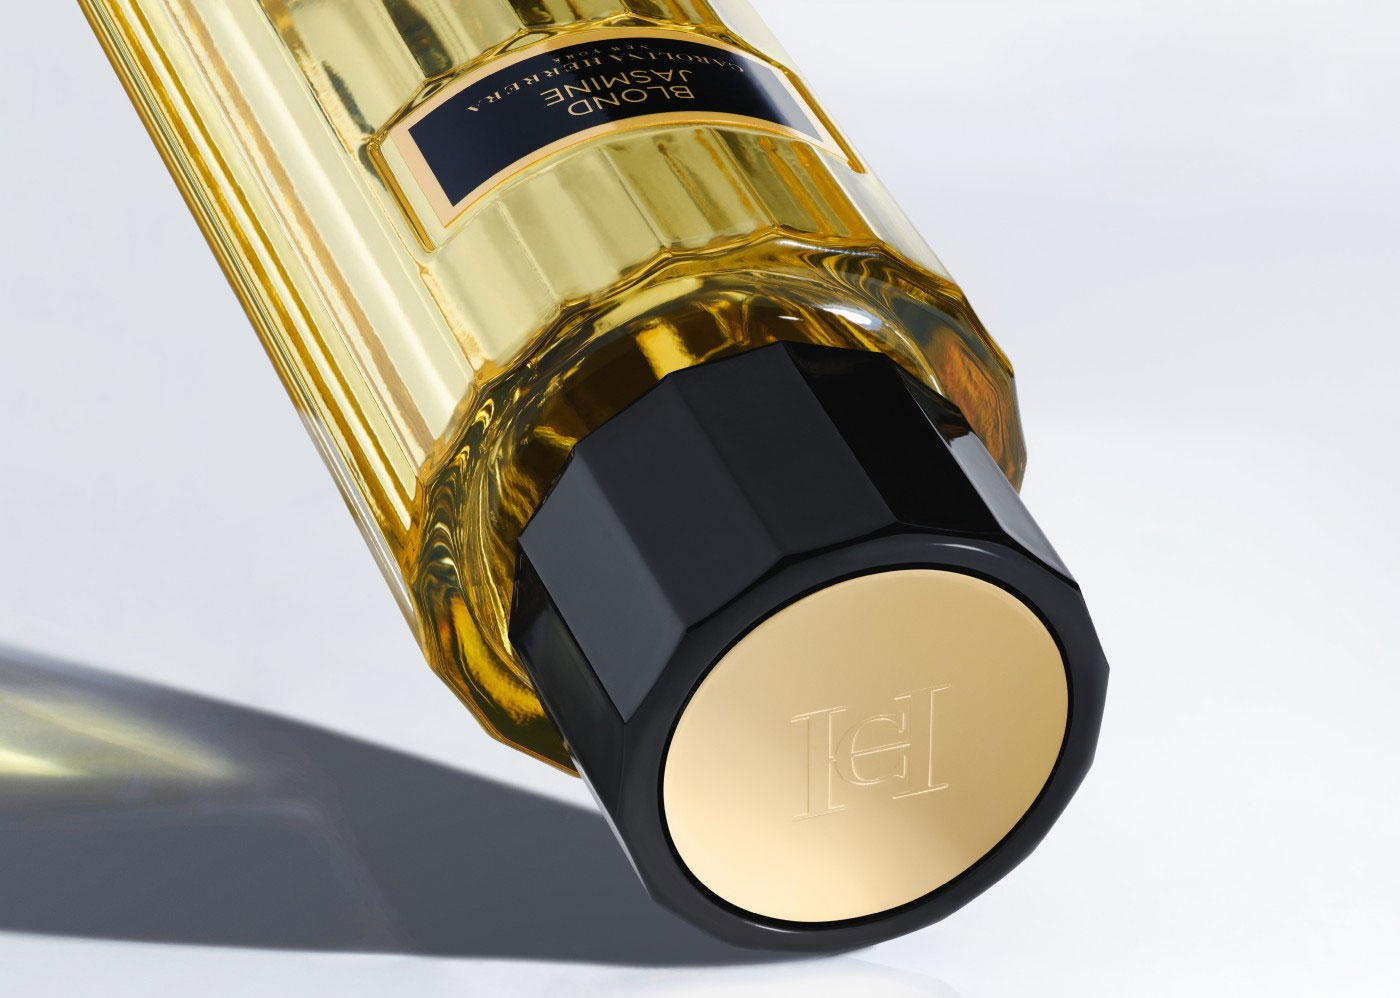 Blond Jasmine Carolina Herrera perfume - a fragrance for women and men 2017